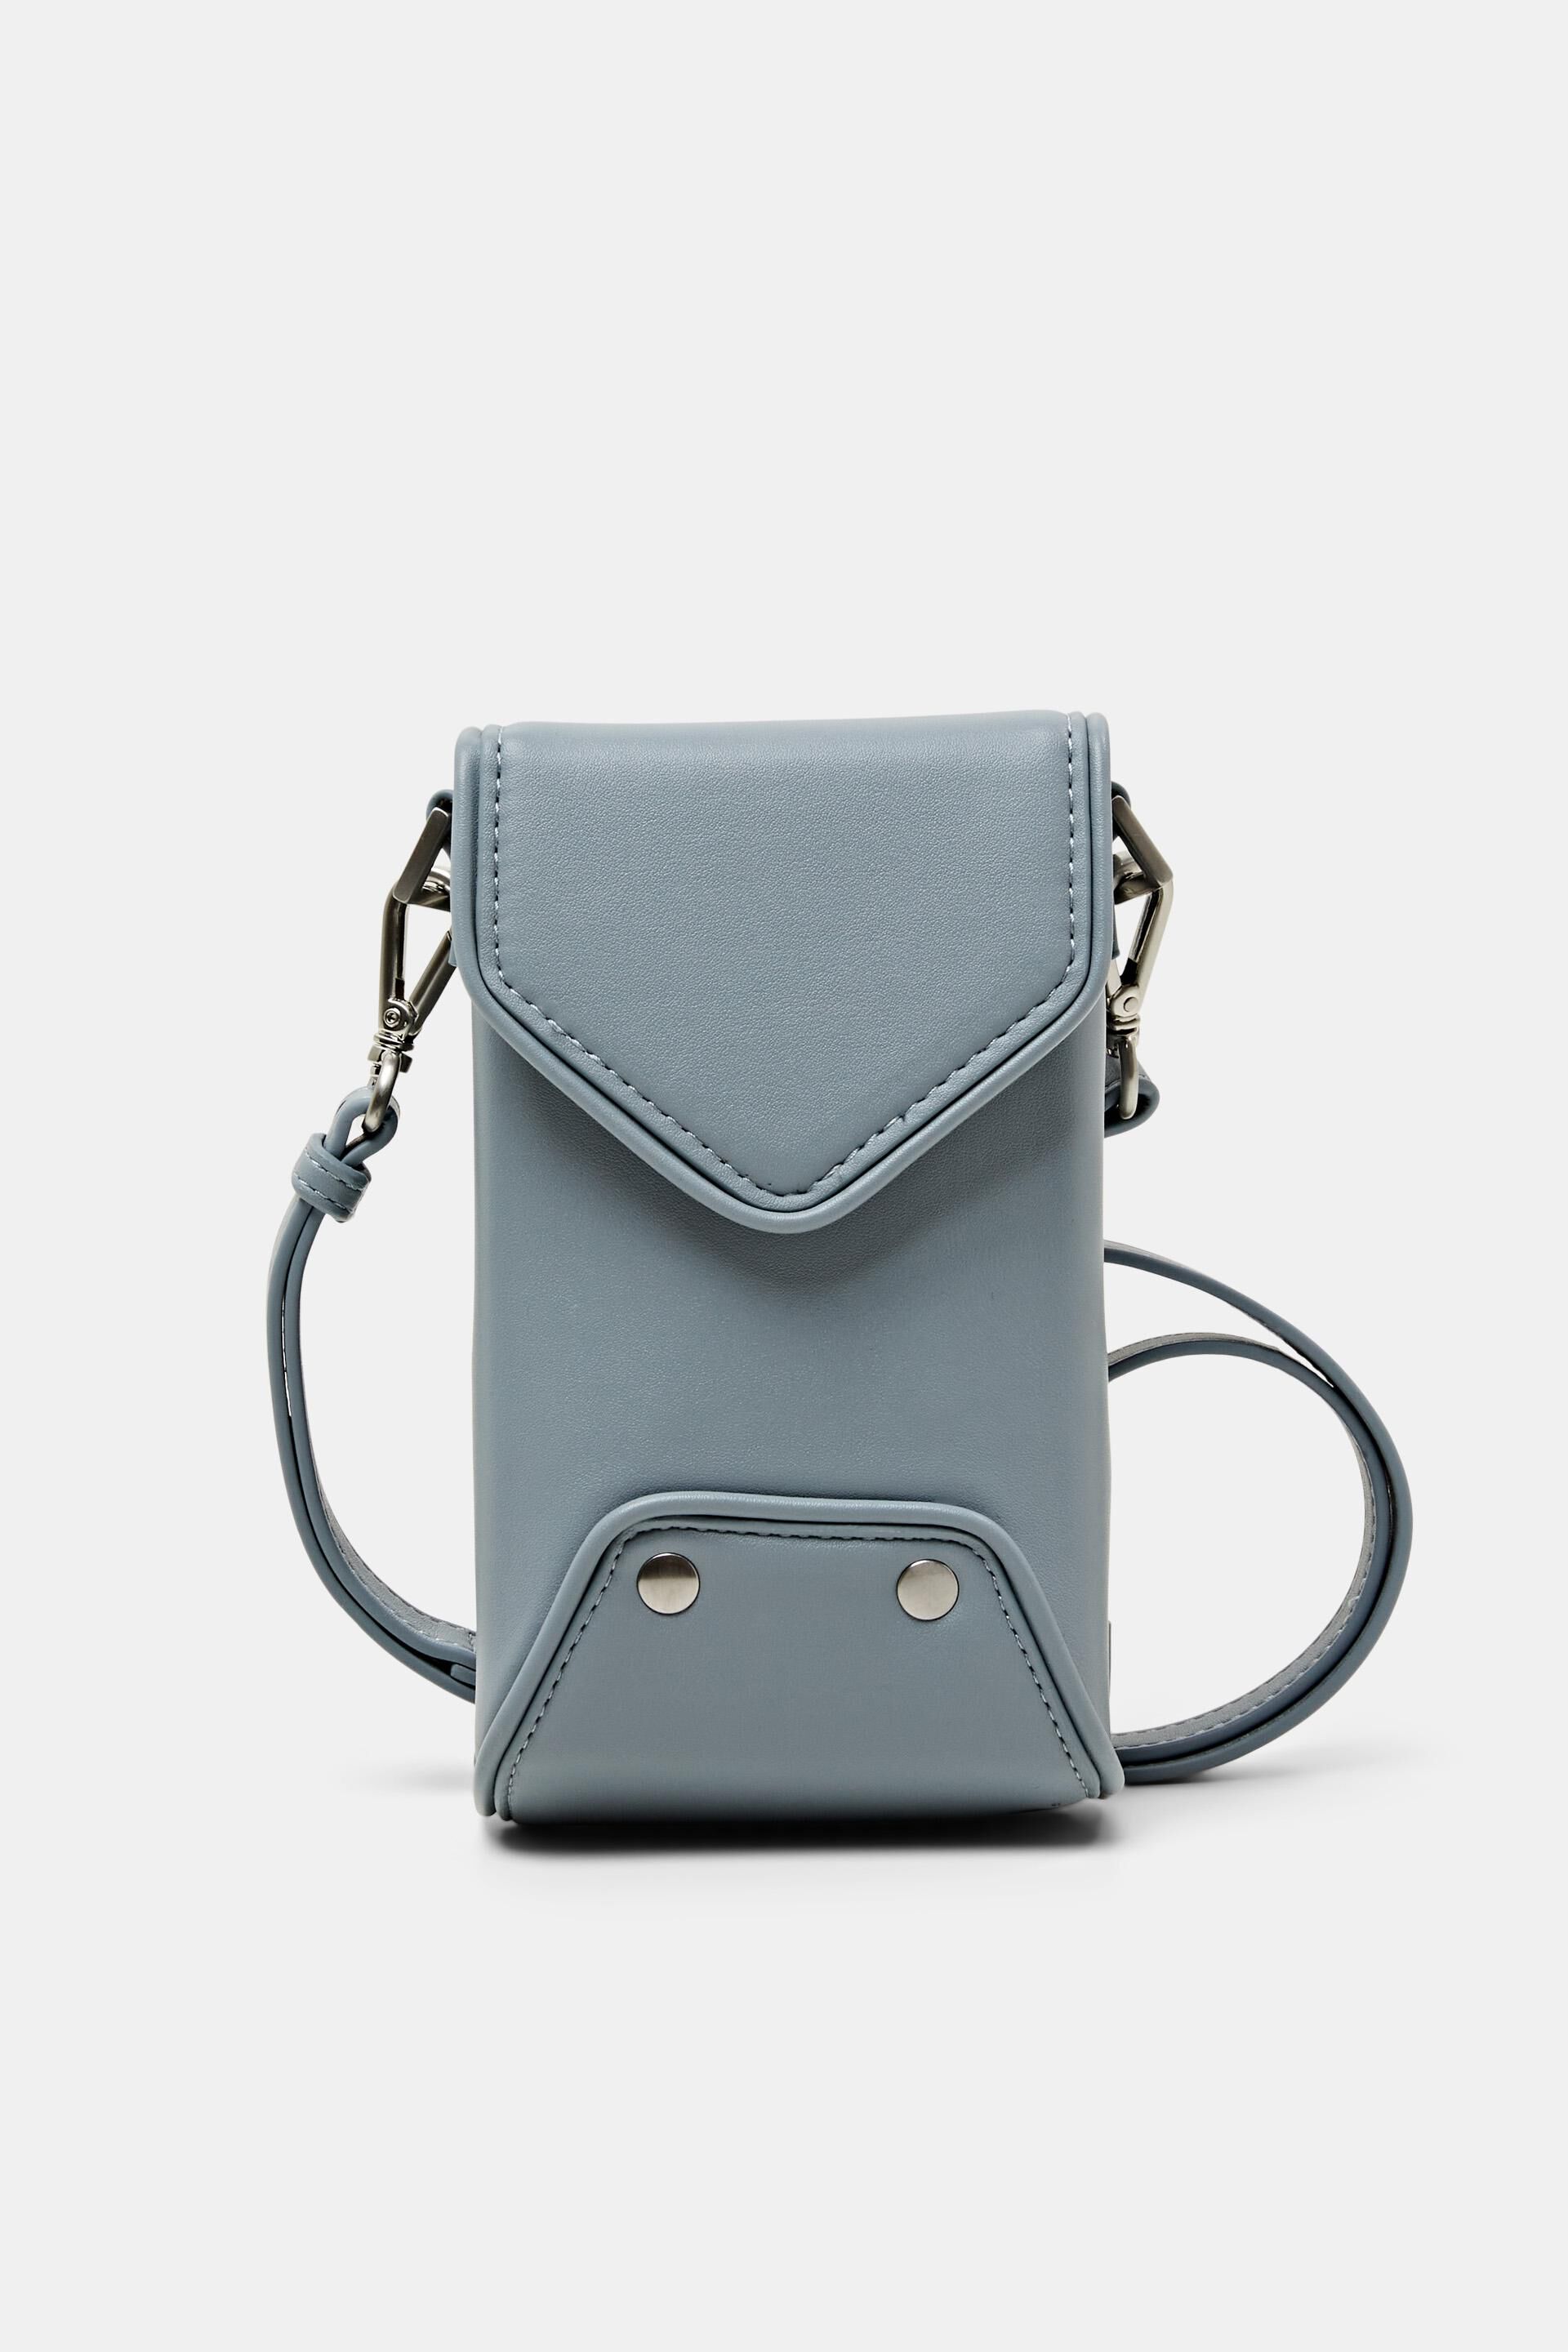 Lappella Mia Soft leather Crossbody Bag/Phone Bag • Bagcraft UK